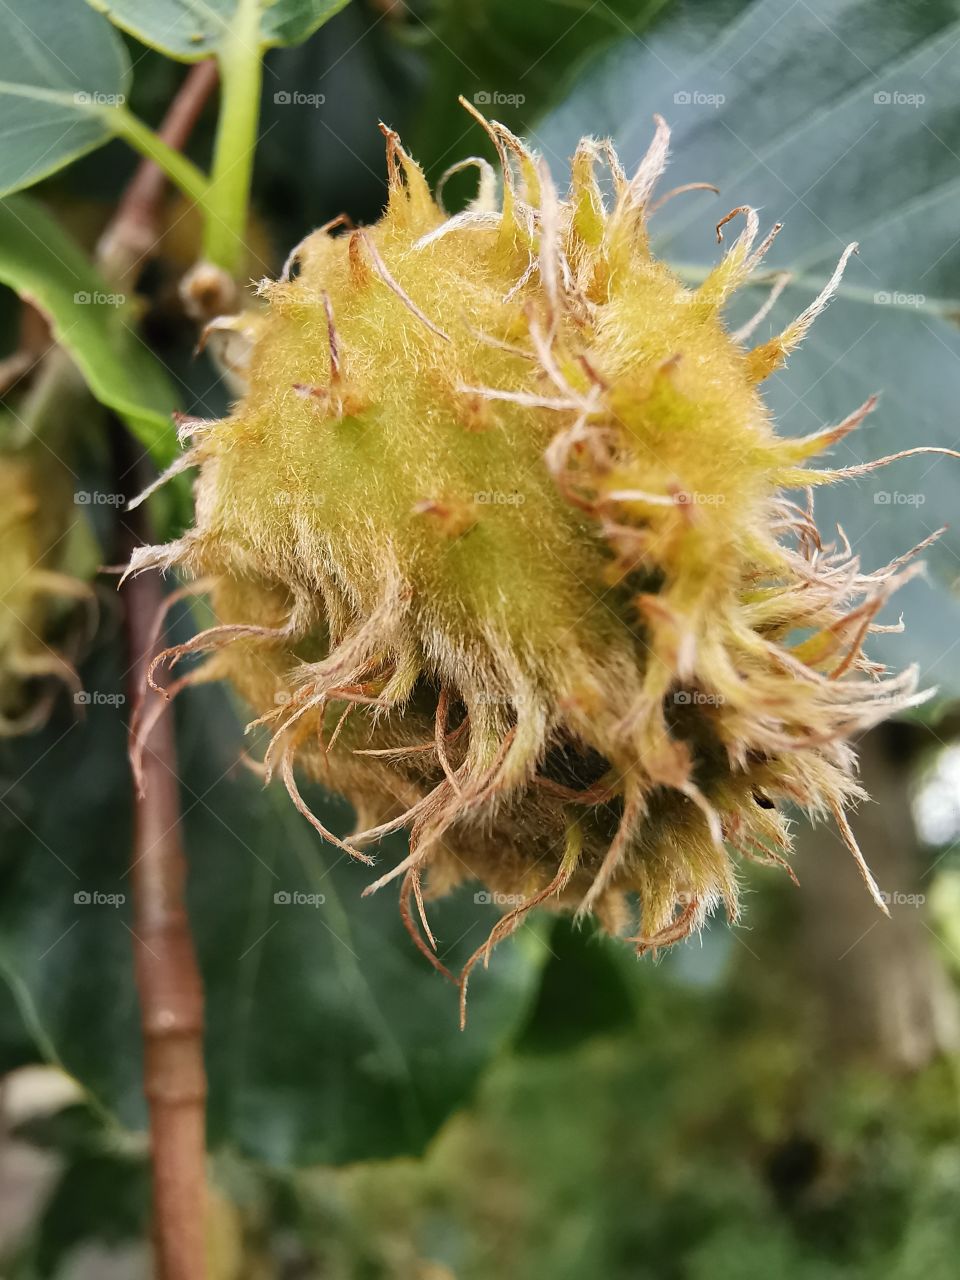 Seed pod of the  beech tree